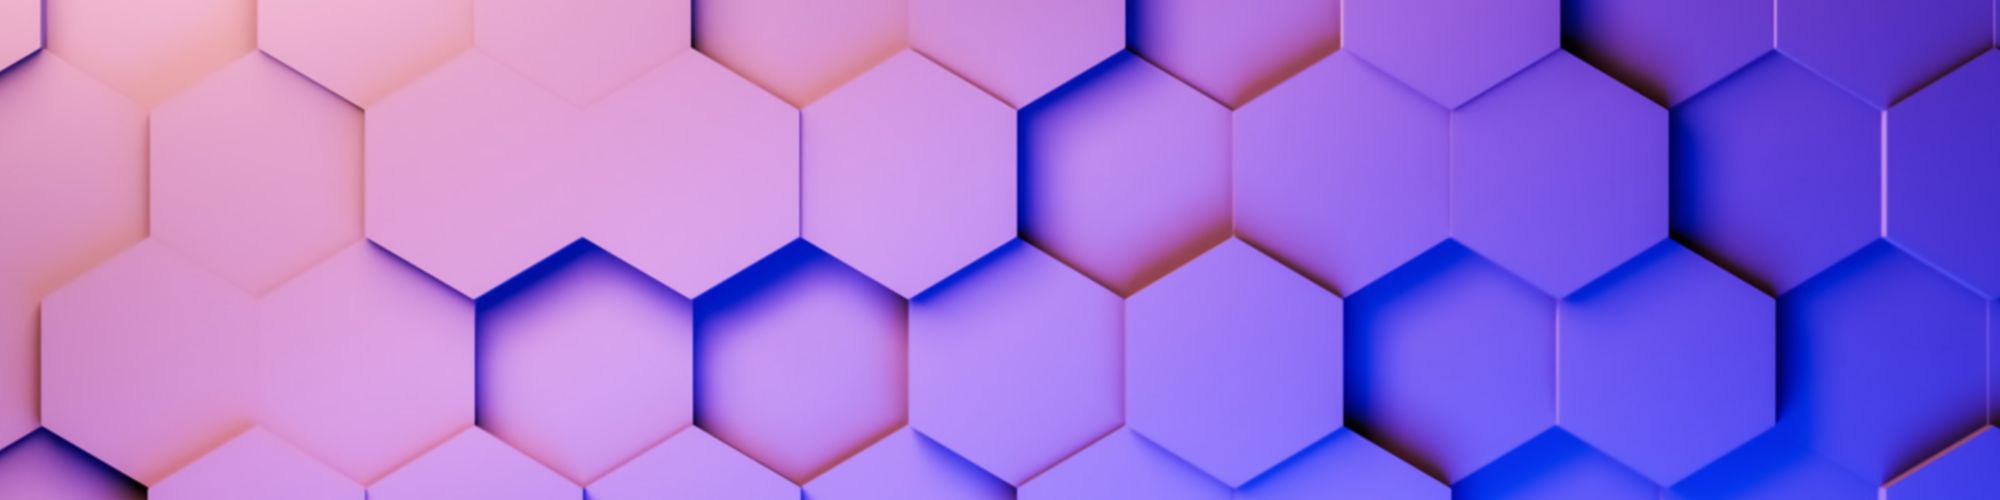 hexagonal purple 3d background